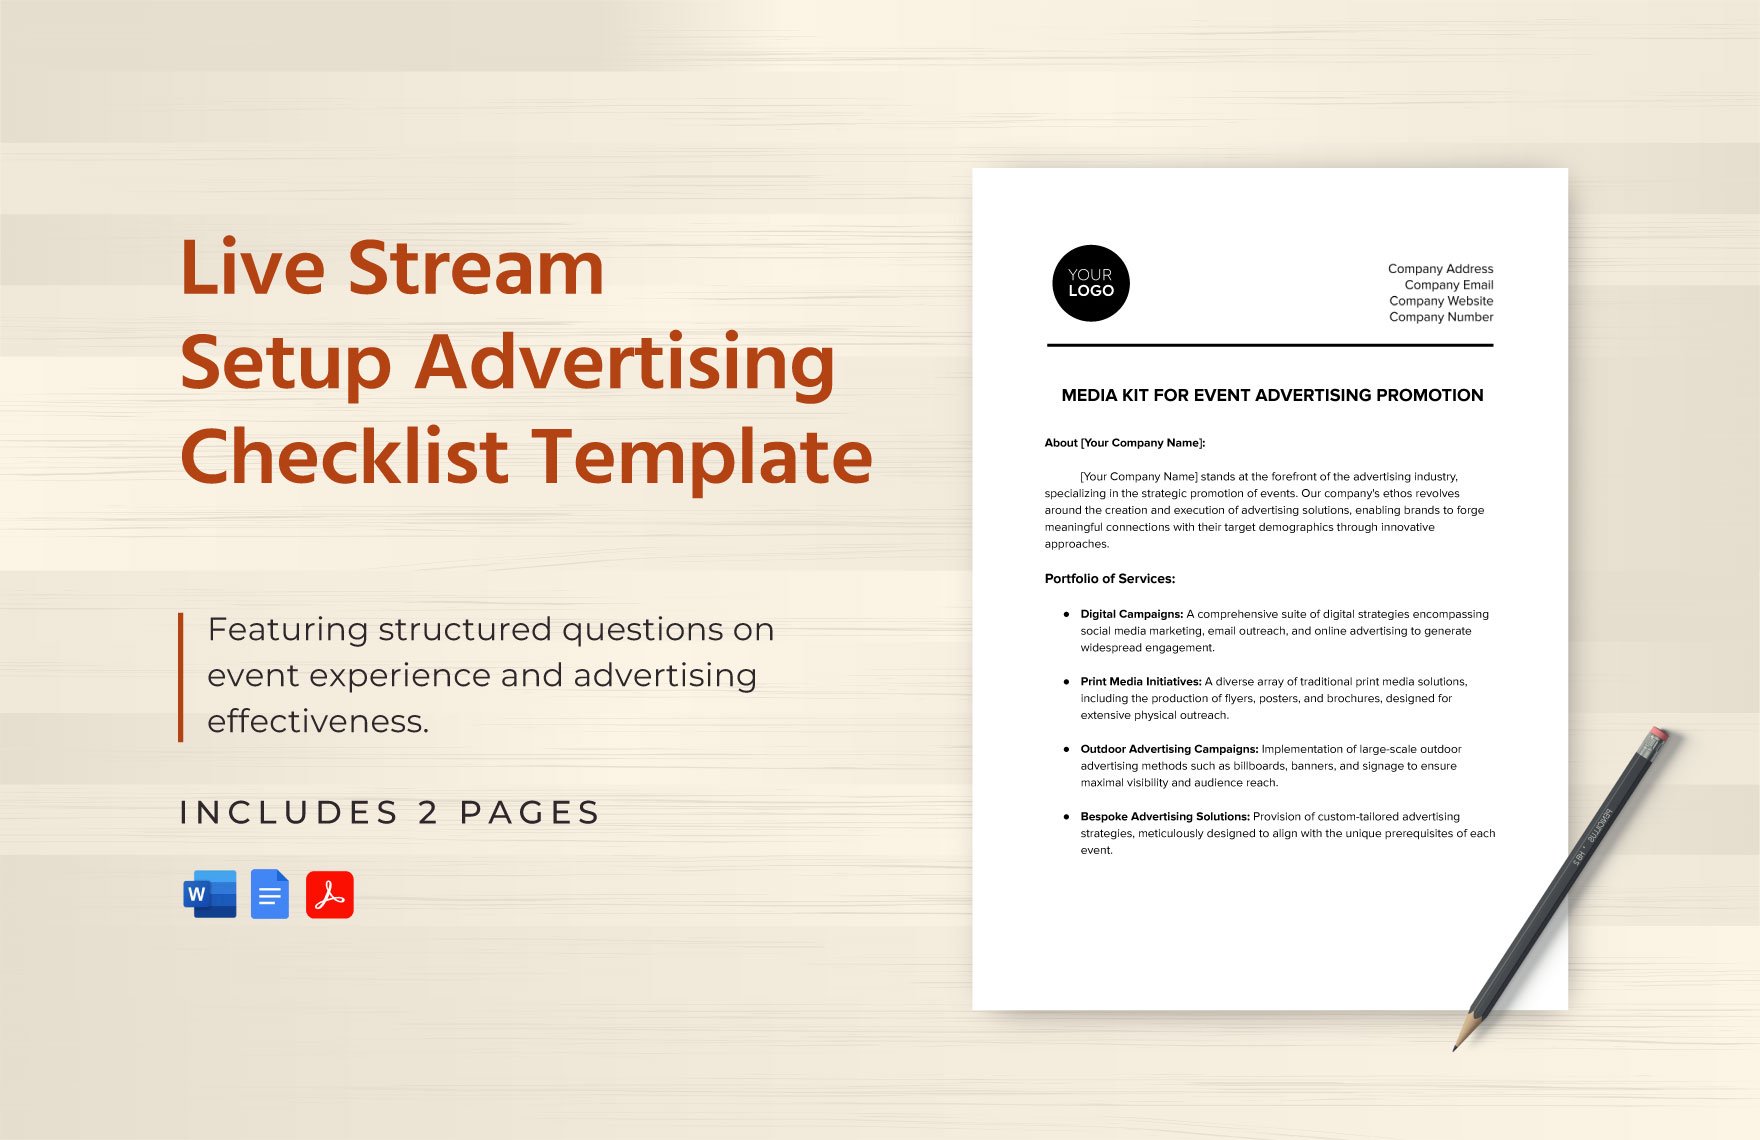 Live Stream Setup Advertising Checklist Template in Word, Google Docs, PDF